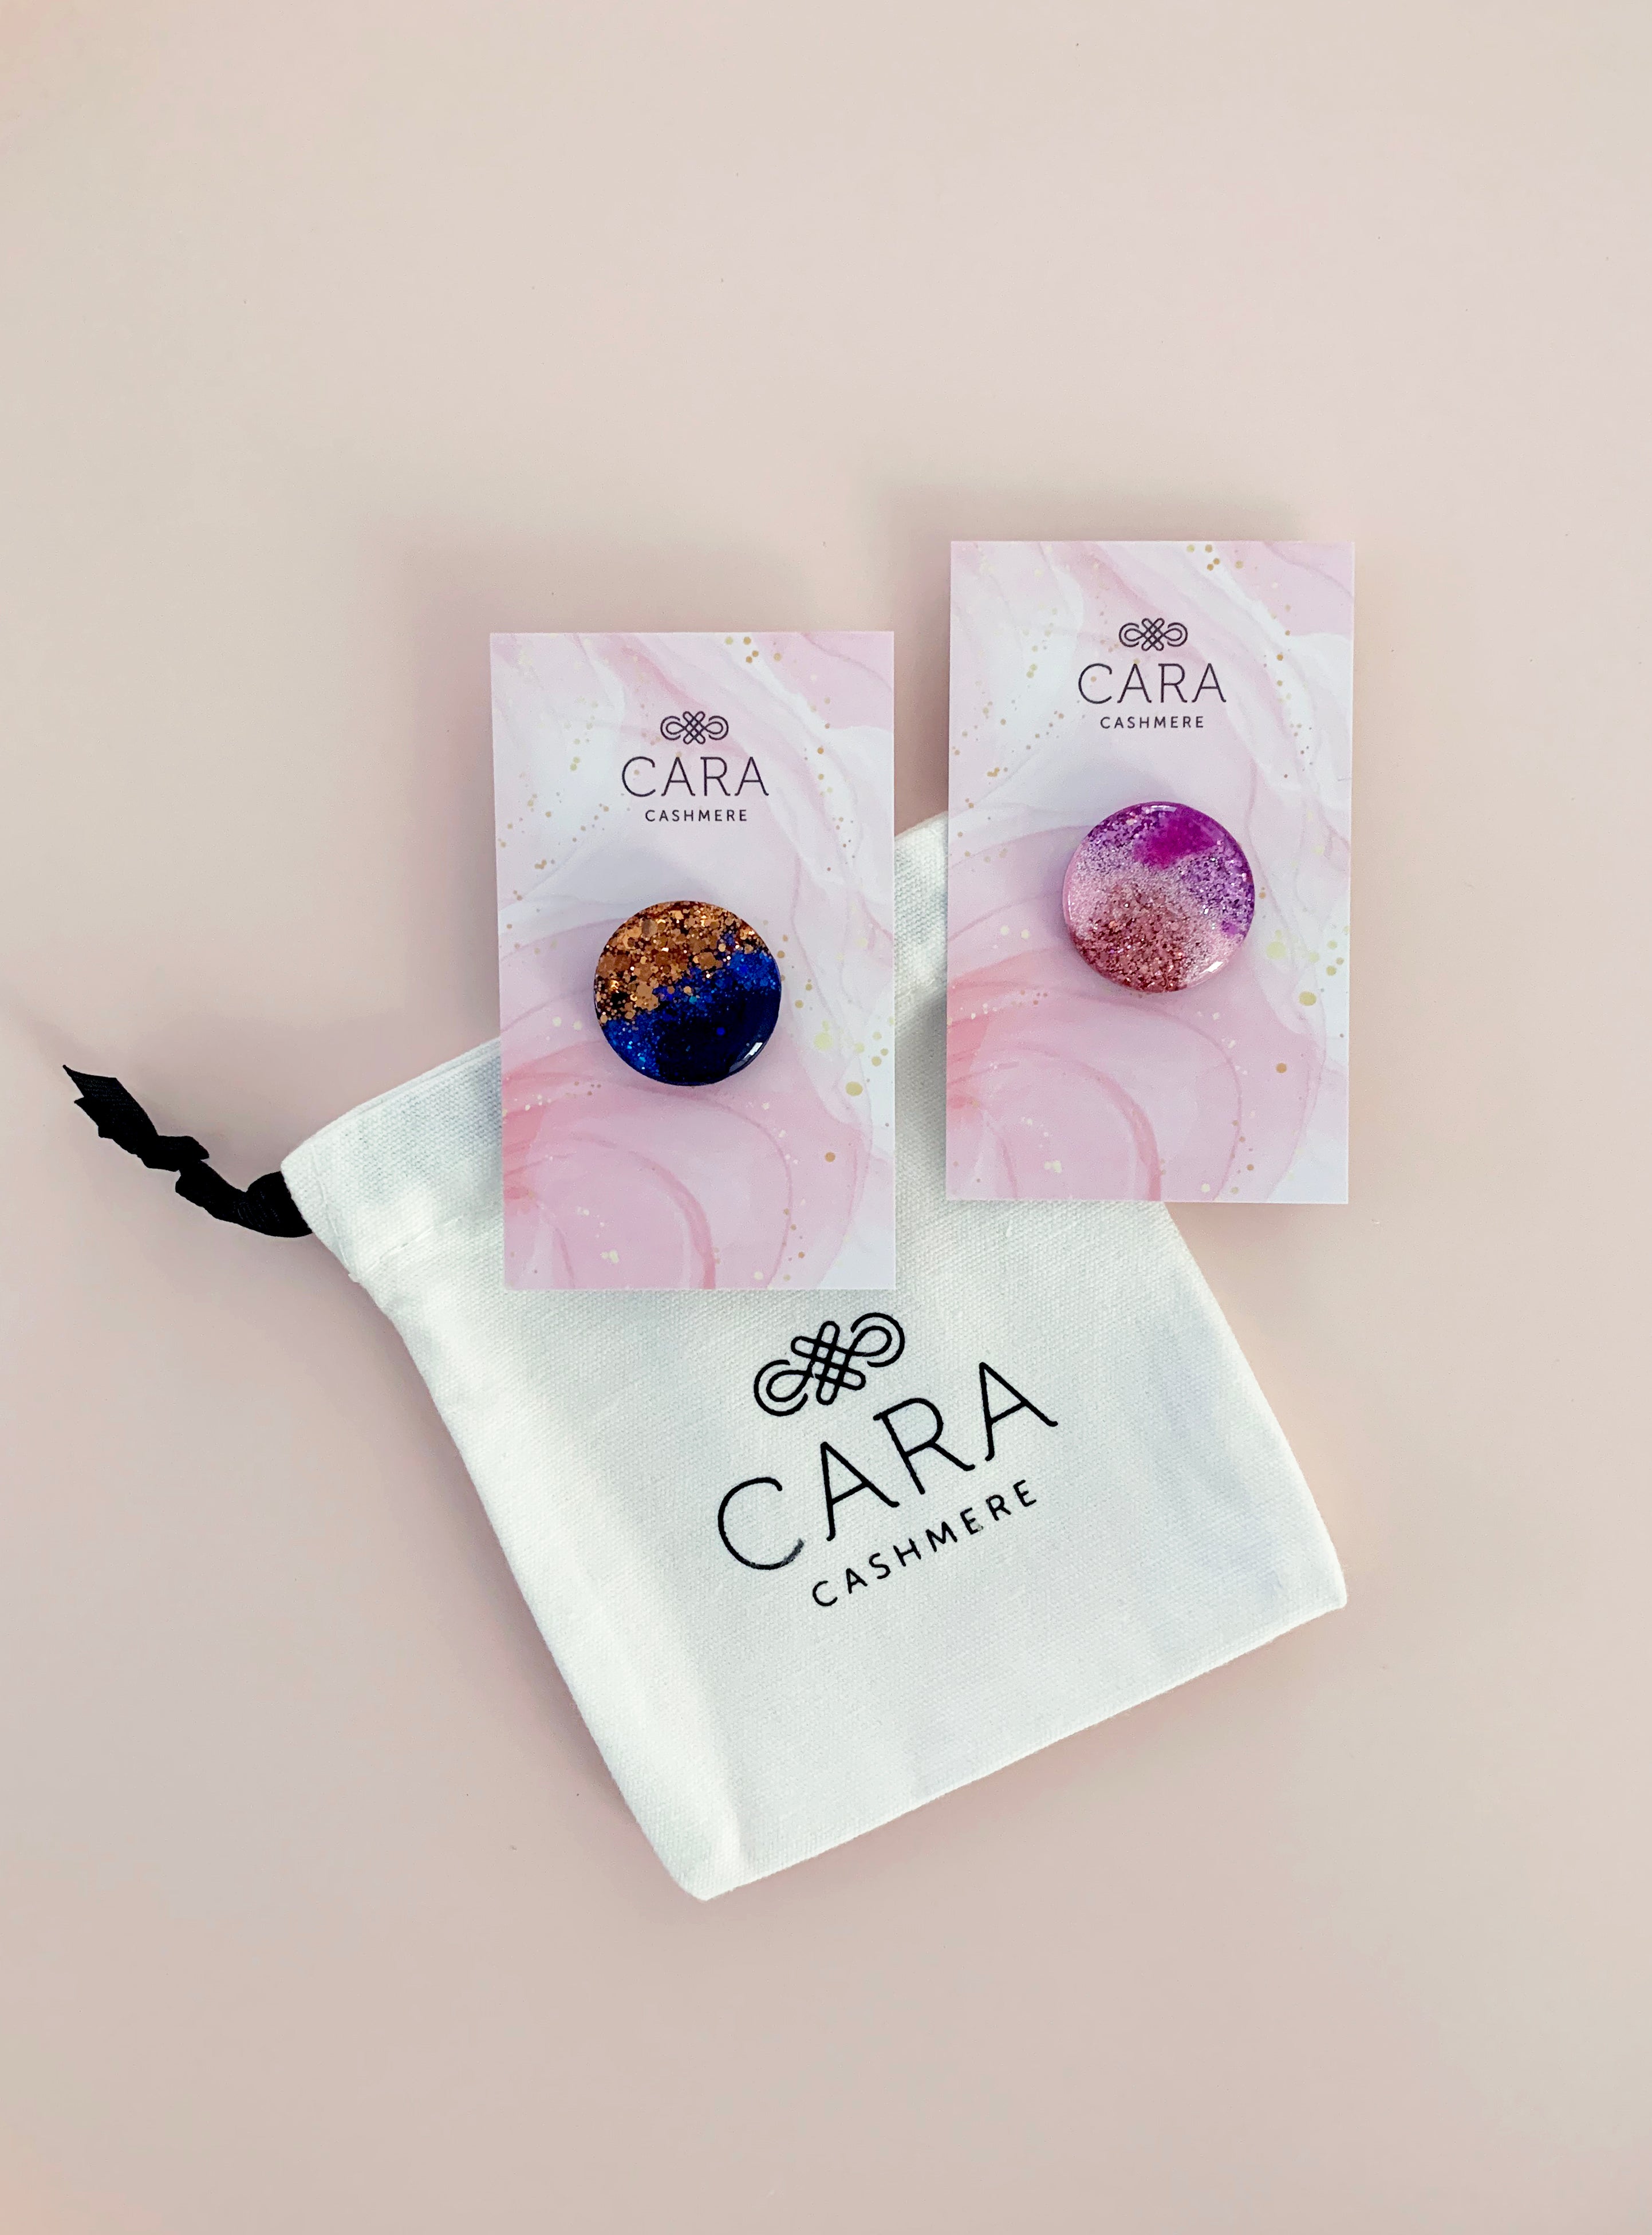 Teal Cashmere Wrap - Cara Cashmere